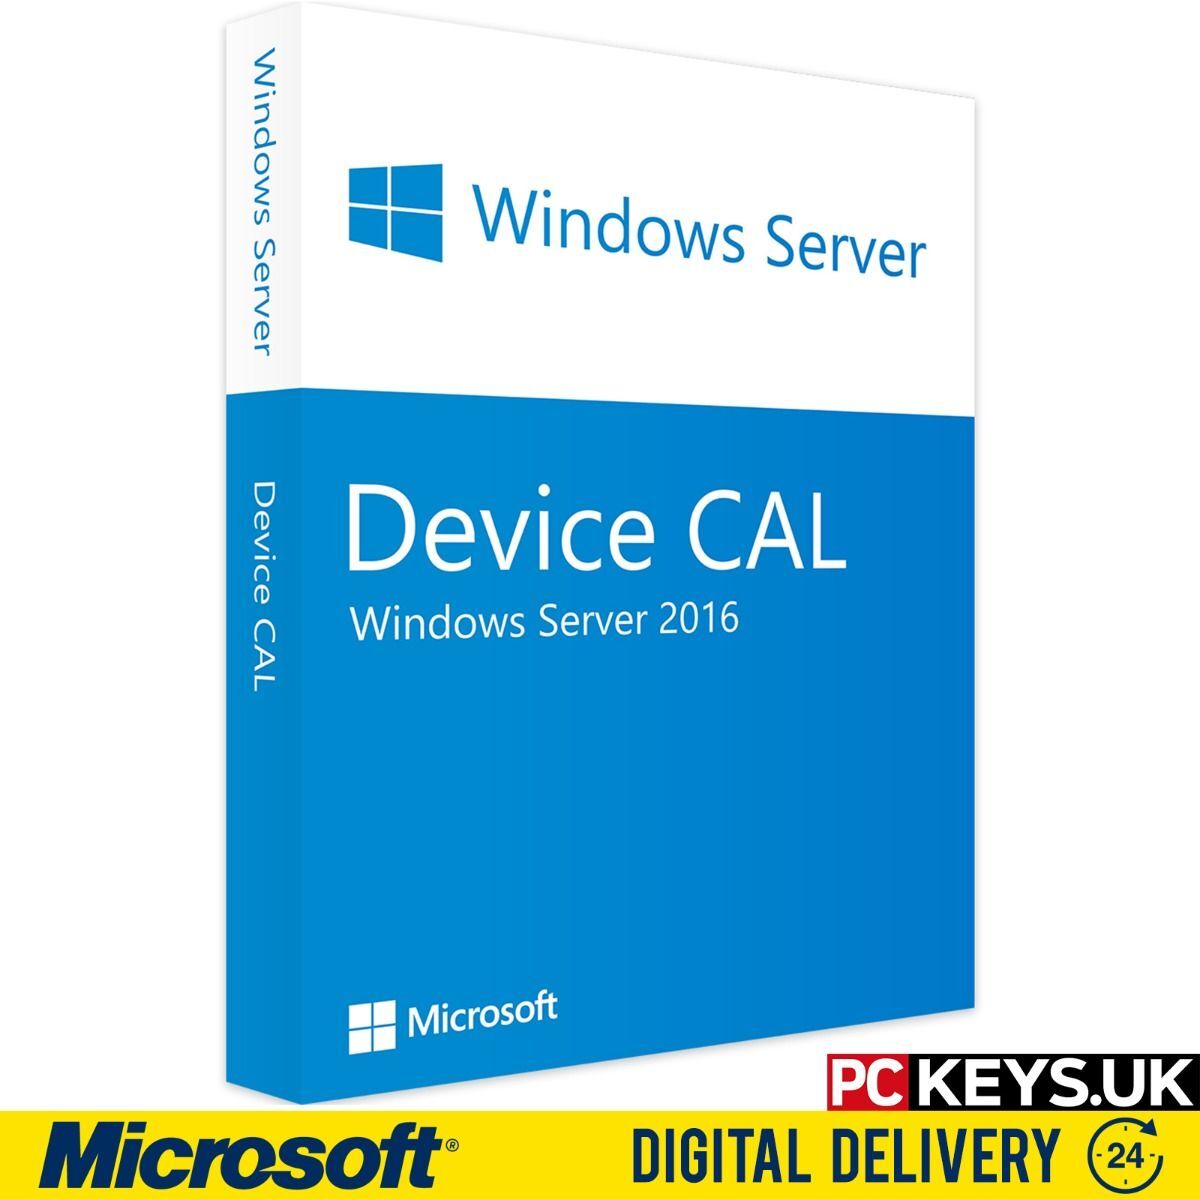 Microsoft Windows Server 2016 Device CAL Client Access License